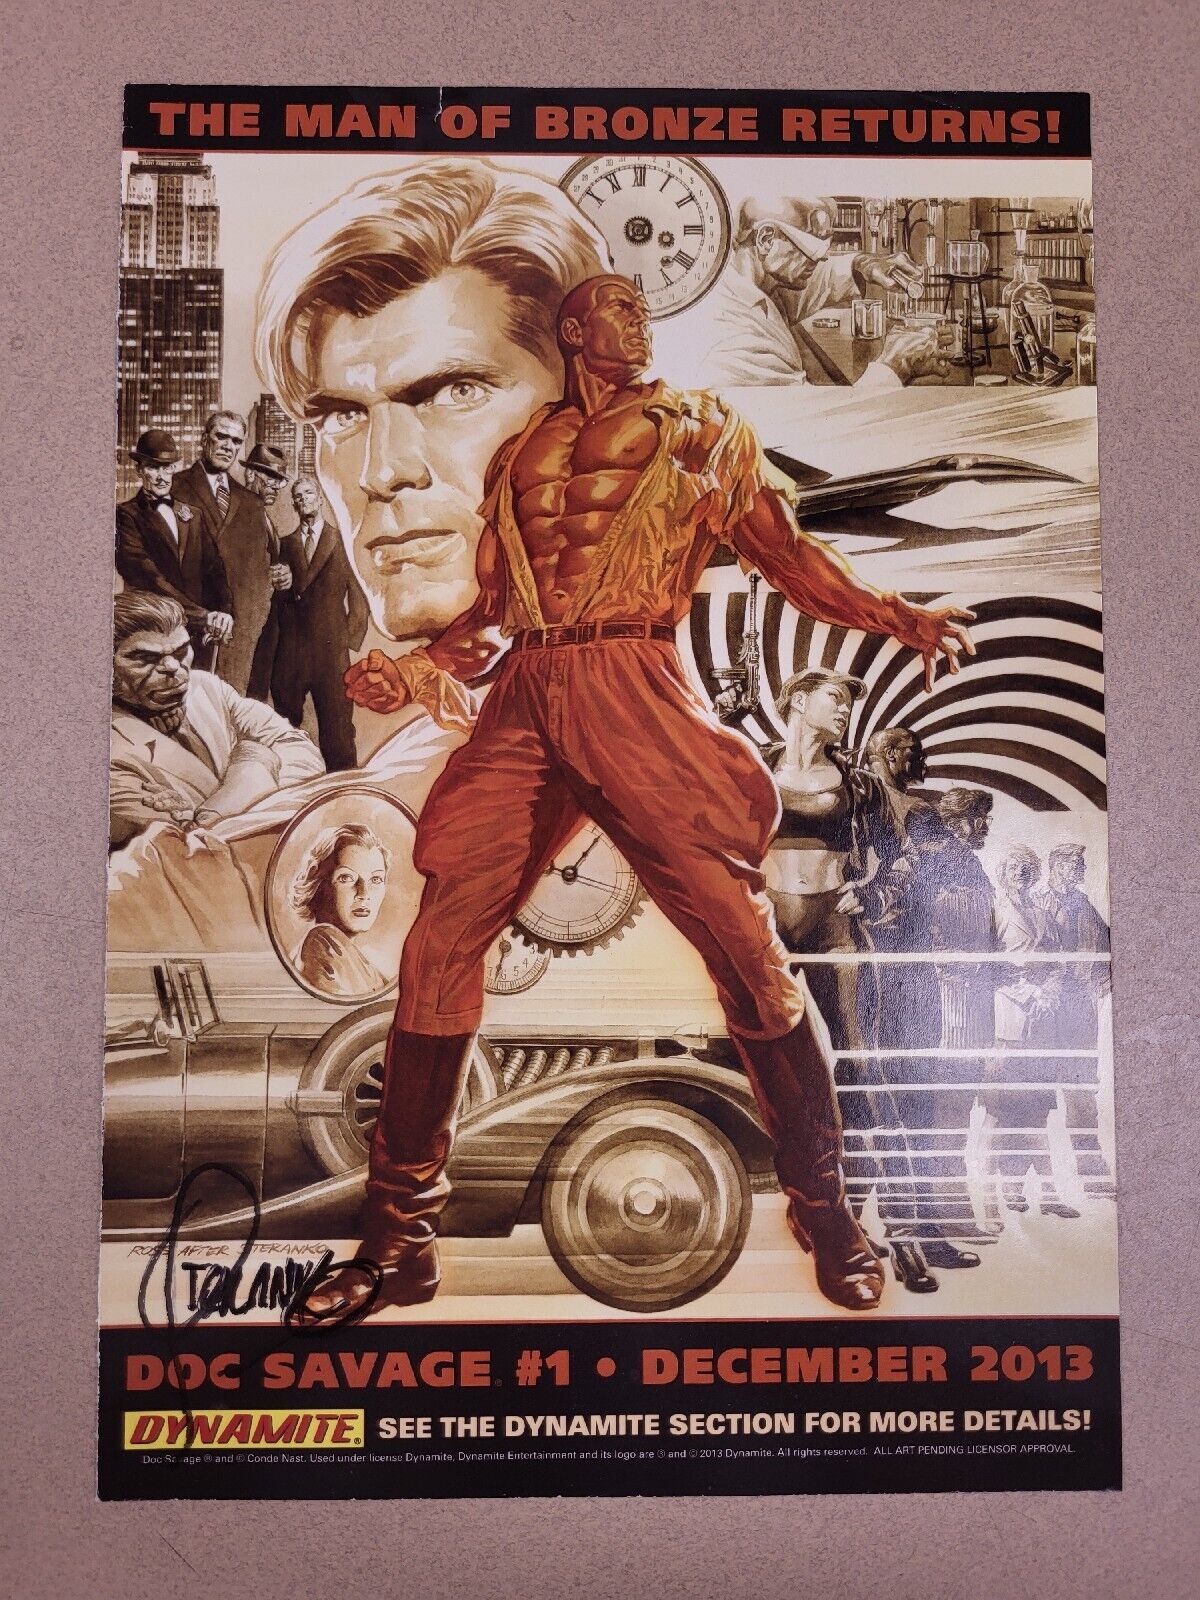 Doc Savage #1 Dynamite Magazine Ad SIGNED by Jim Steranko ca. 2013